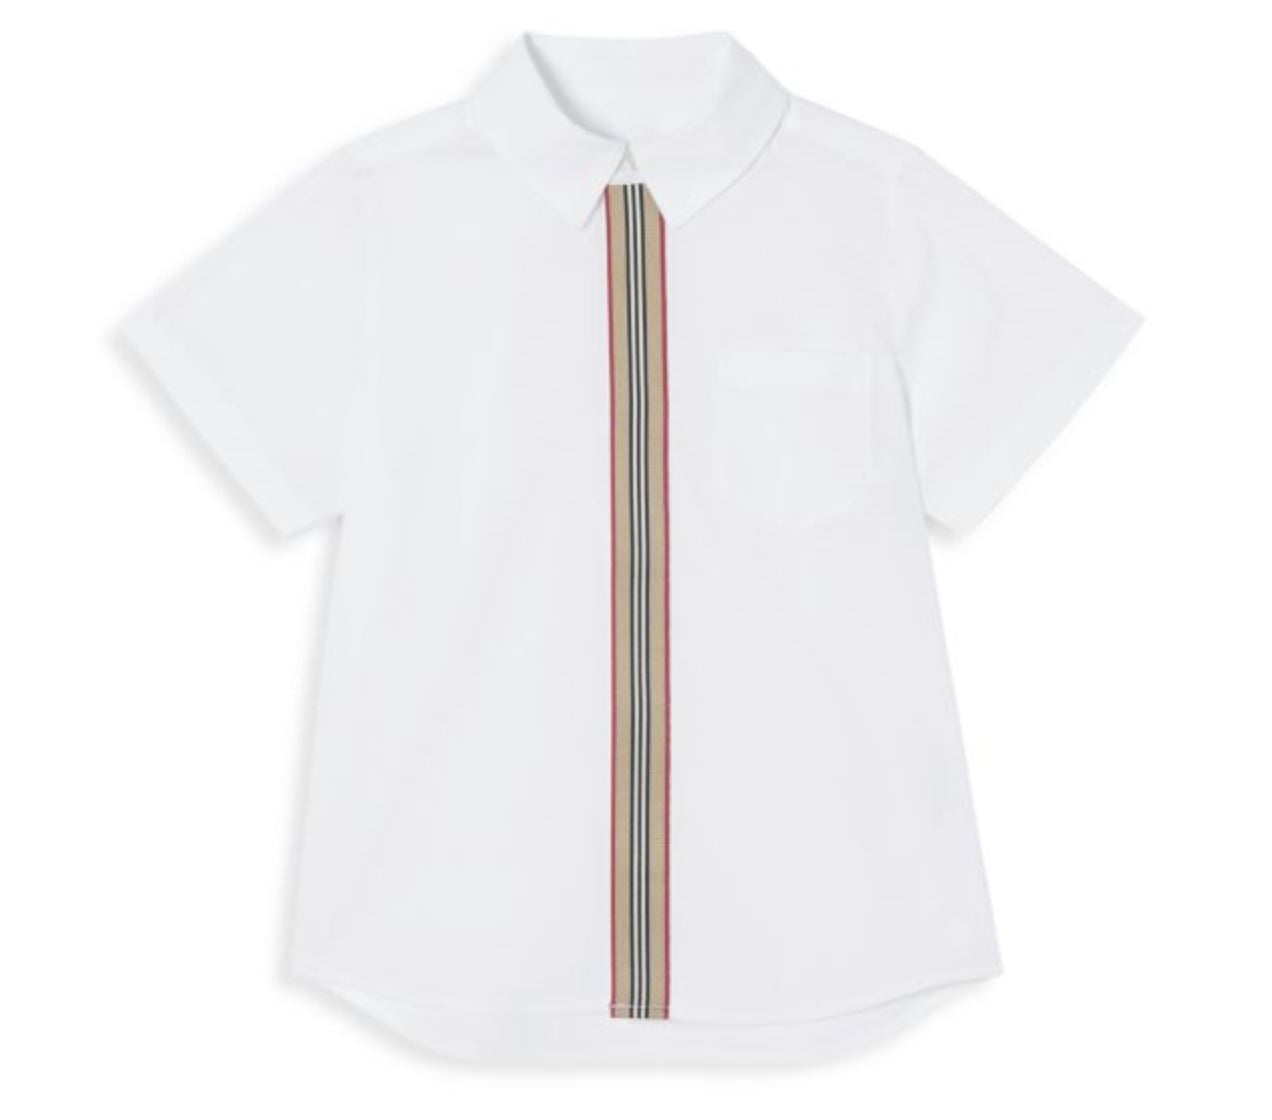 NWT $170 Burberry Little Boy's & Boy's Silverton Short-Sleeve Shirt Size 6